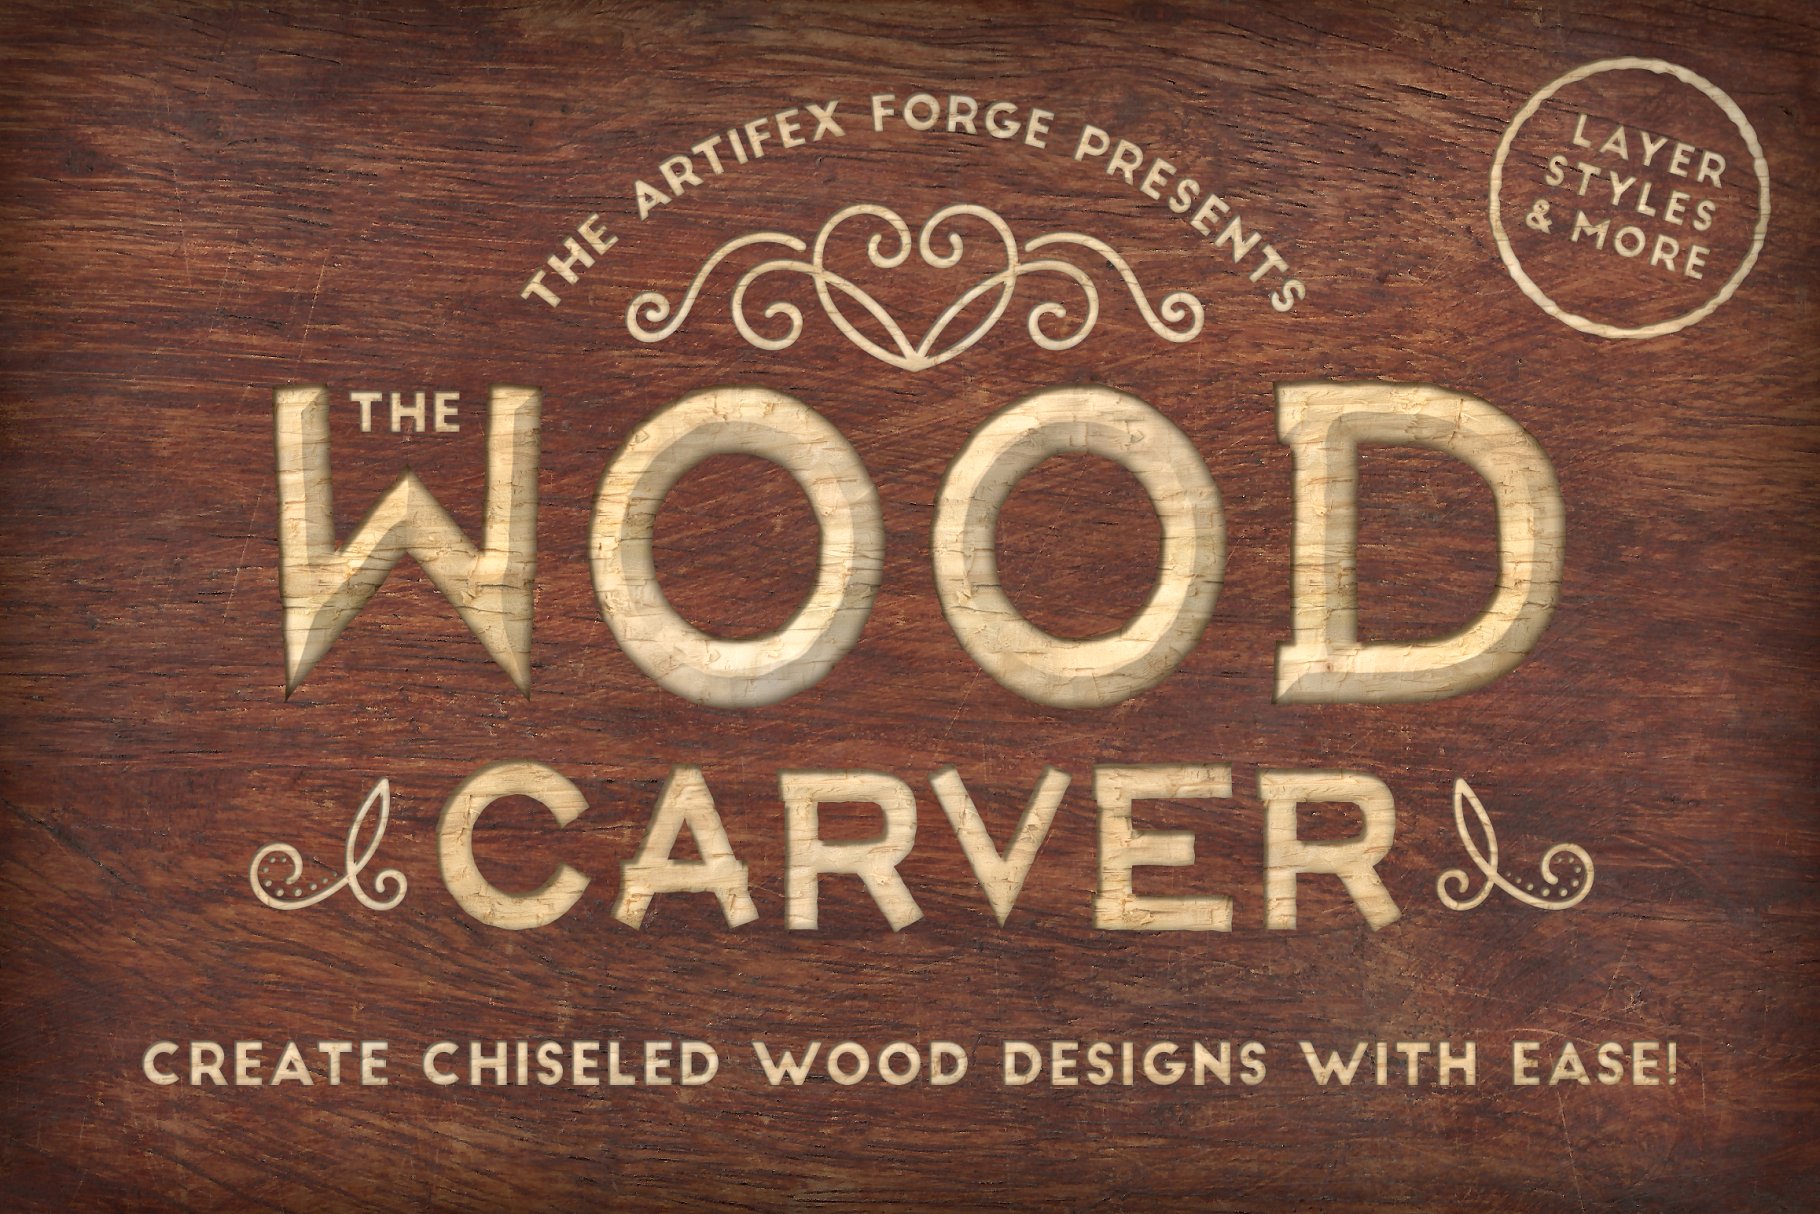 木雕木刻图层样式及木纹背景 The Wood Carver – PS Styles & More插图